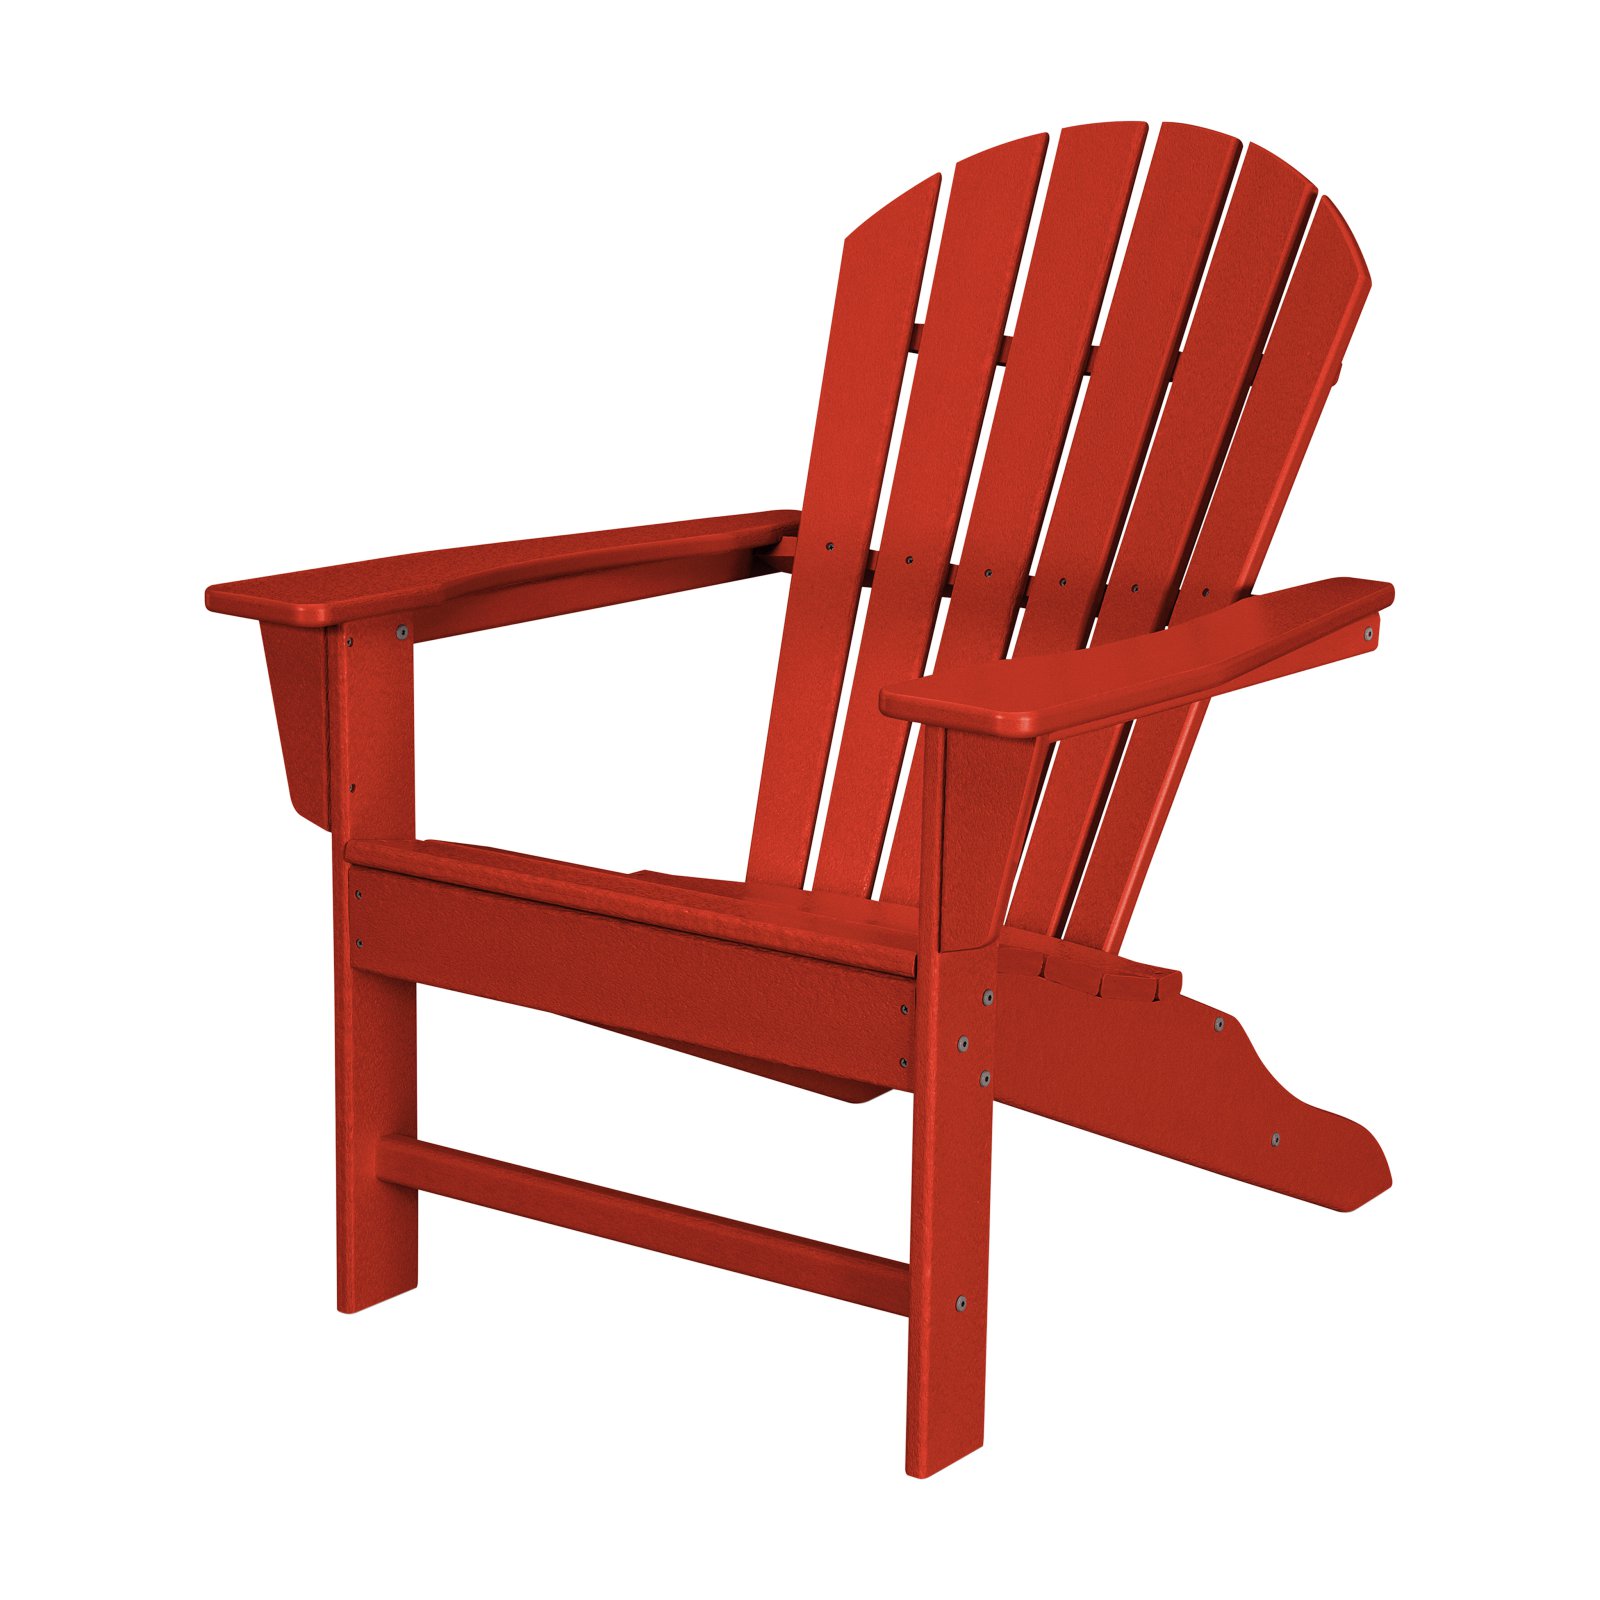 POLYWOOD South Beach Adirondack Chair - image 1 of 2